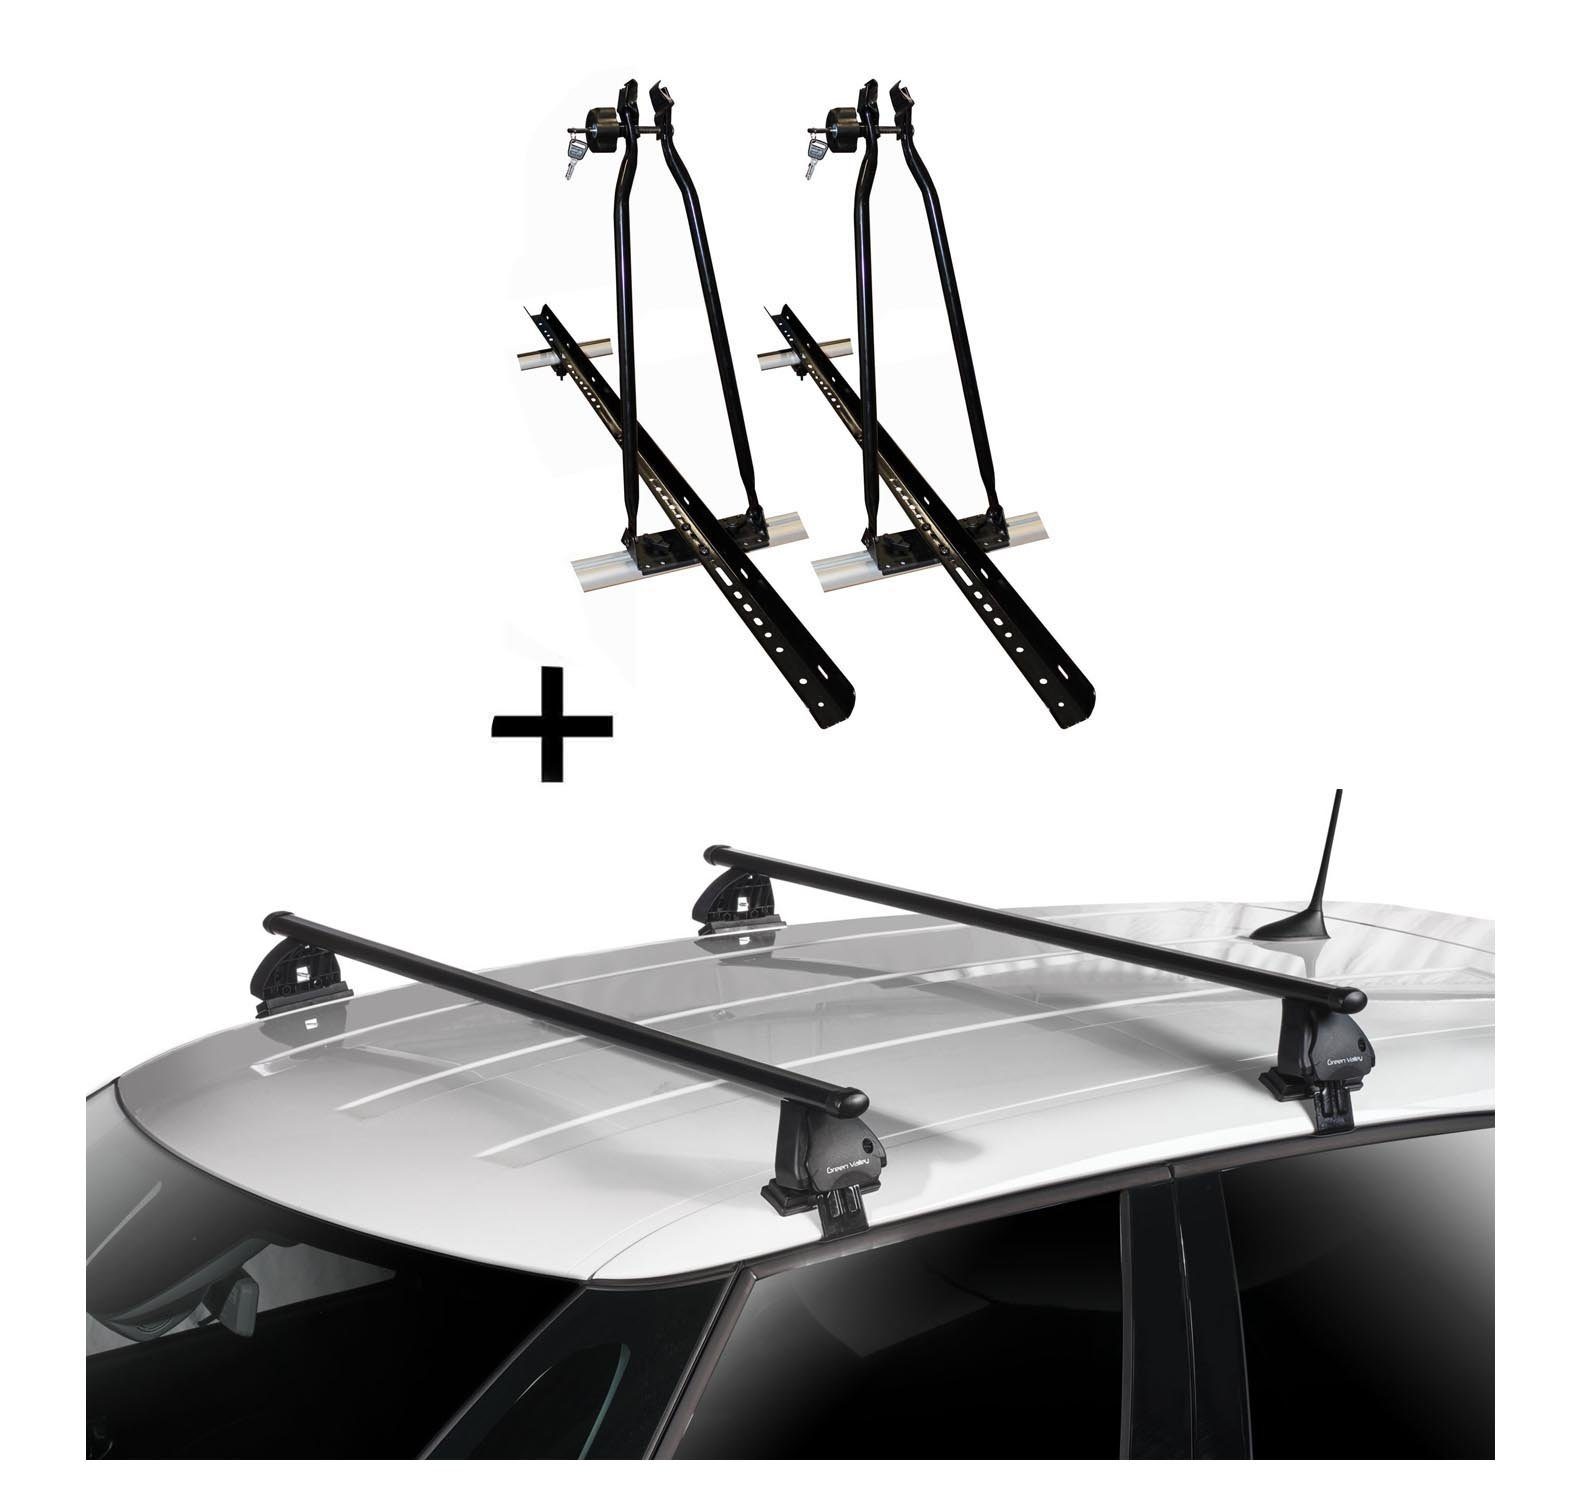 VDP Dachträger, 2x VDP Fahrradträger Dachfahrradträger + Dachträger VDP EVO Stahl kompatibel mit Renault Talisman 4 Türer ab 2016